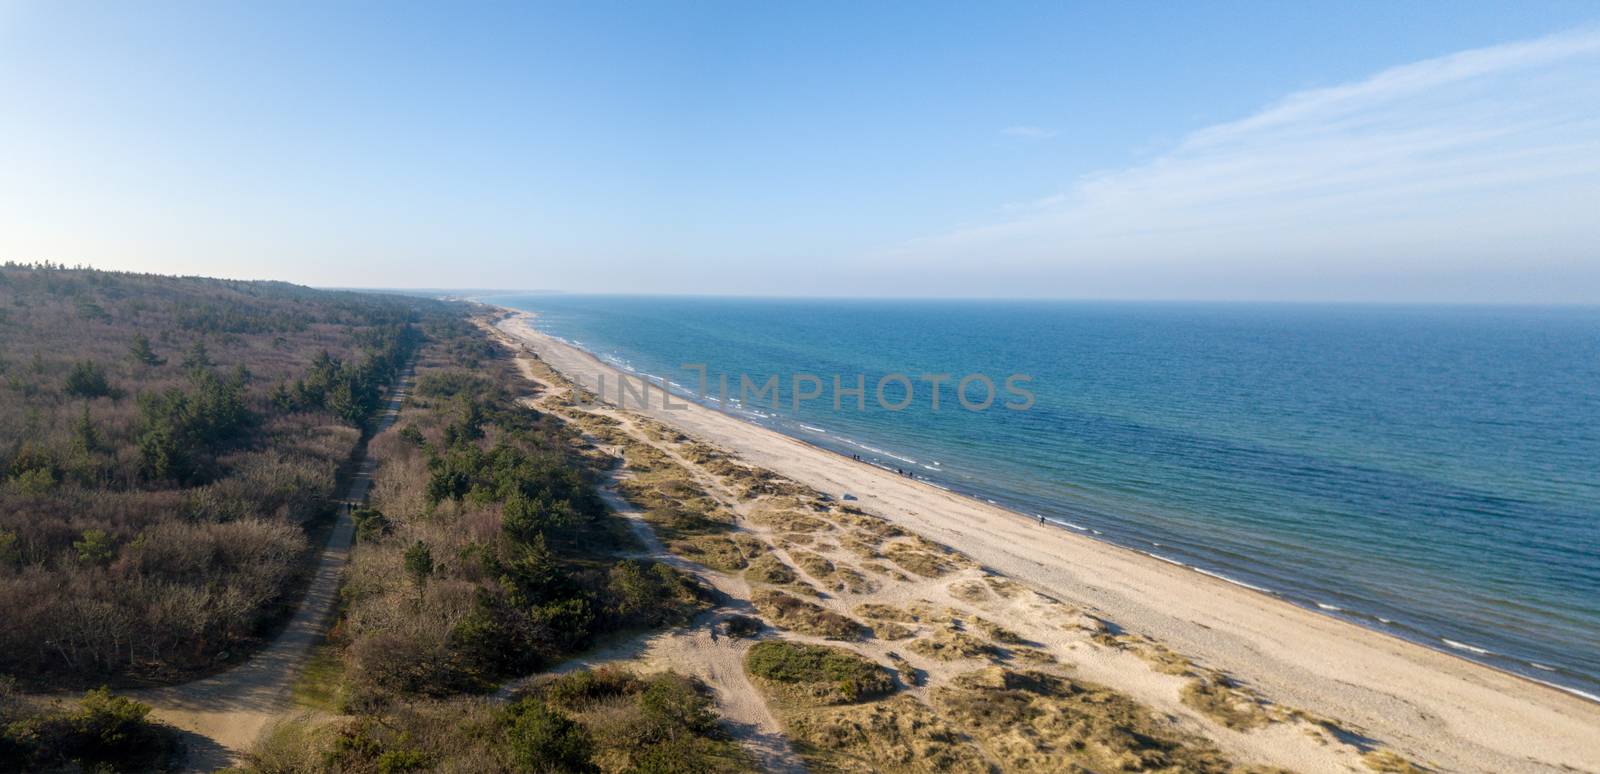 Aerial view of Tisvildeleje Beach, Denmark by oliverfoerstner